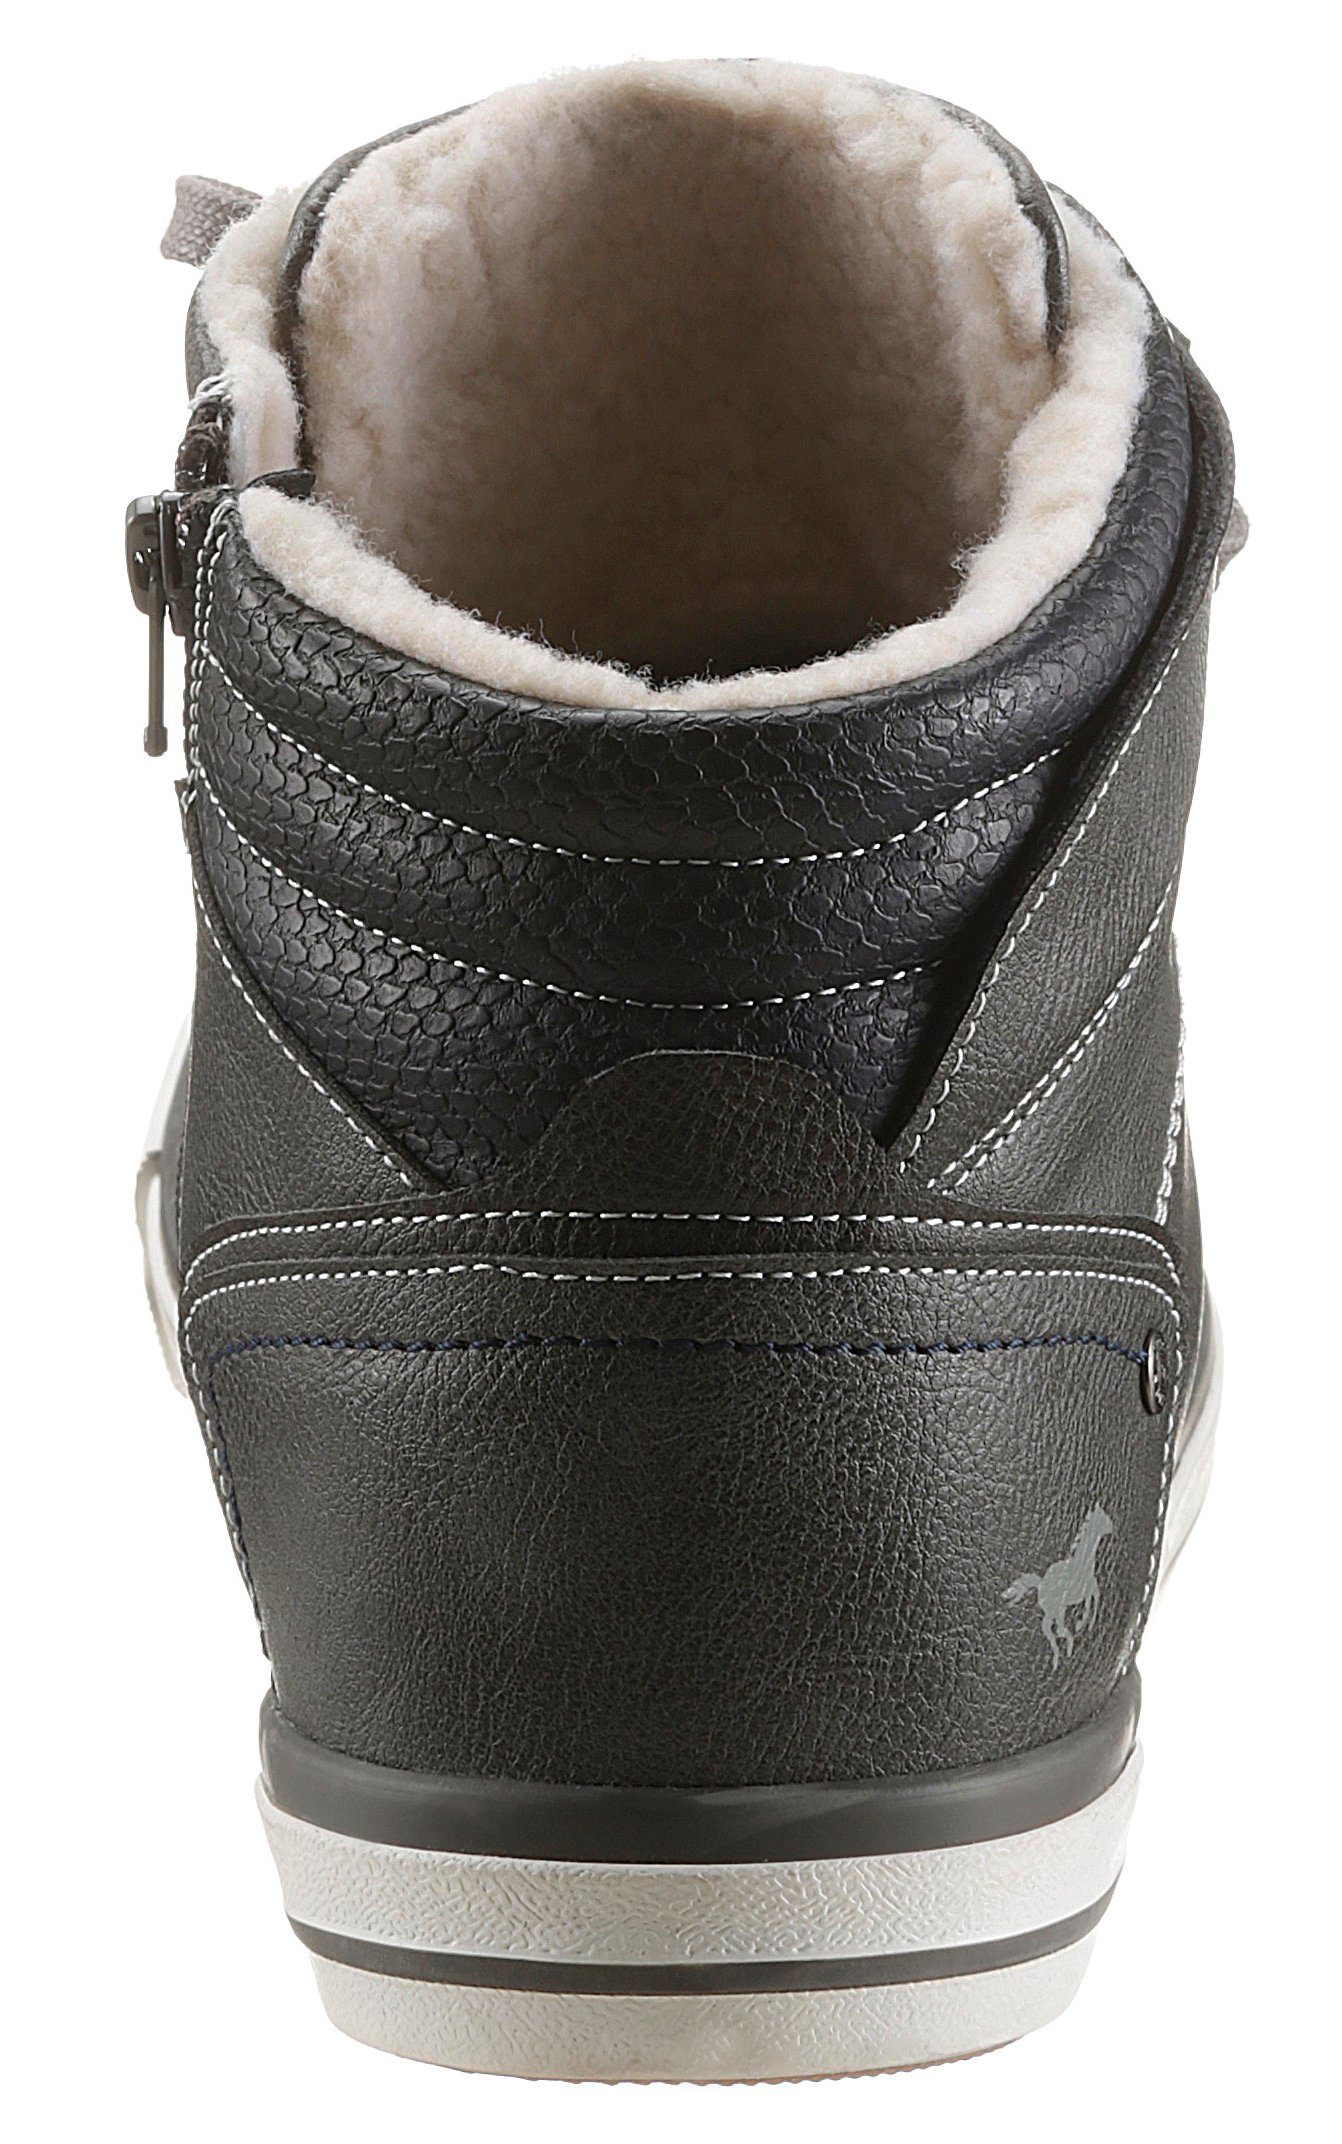 zweckmäßigem grau-used mit Mustang Innenreißverschluss Shoes Sneaker